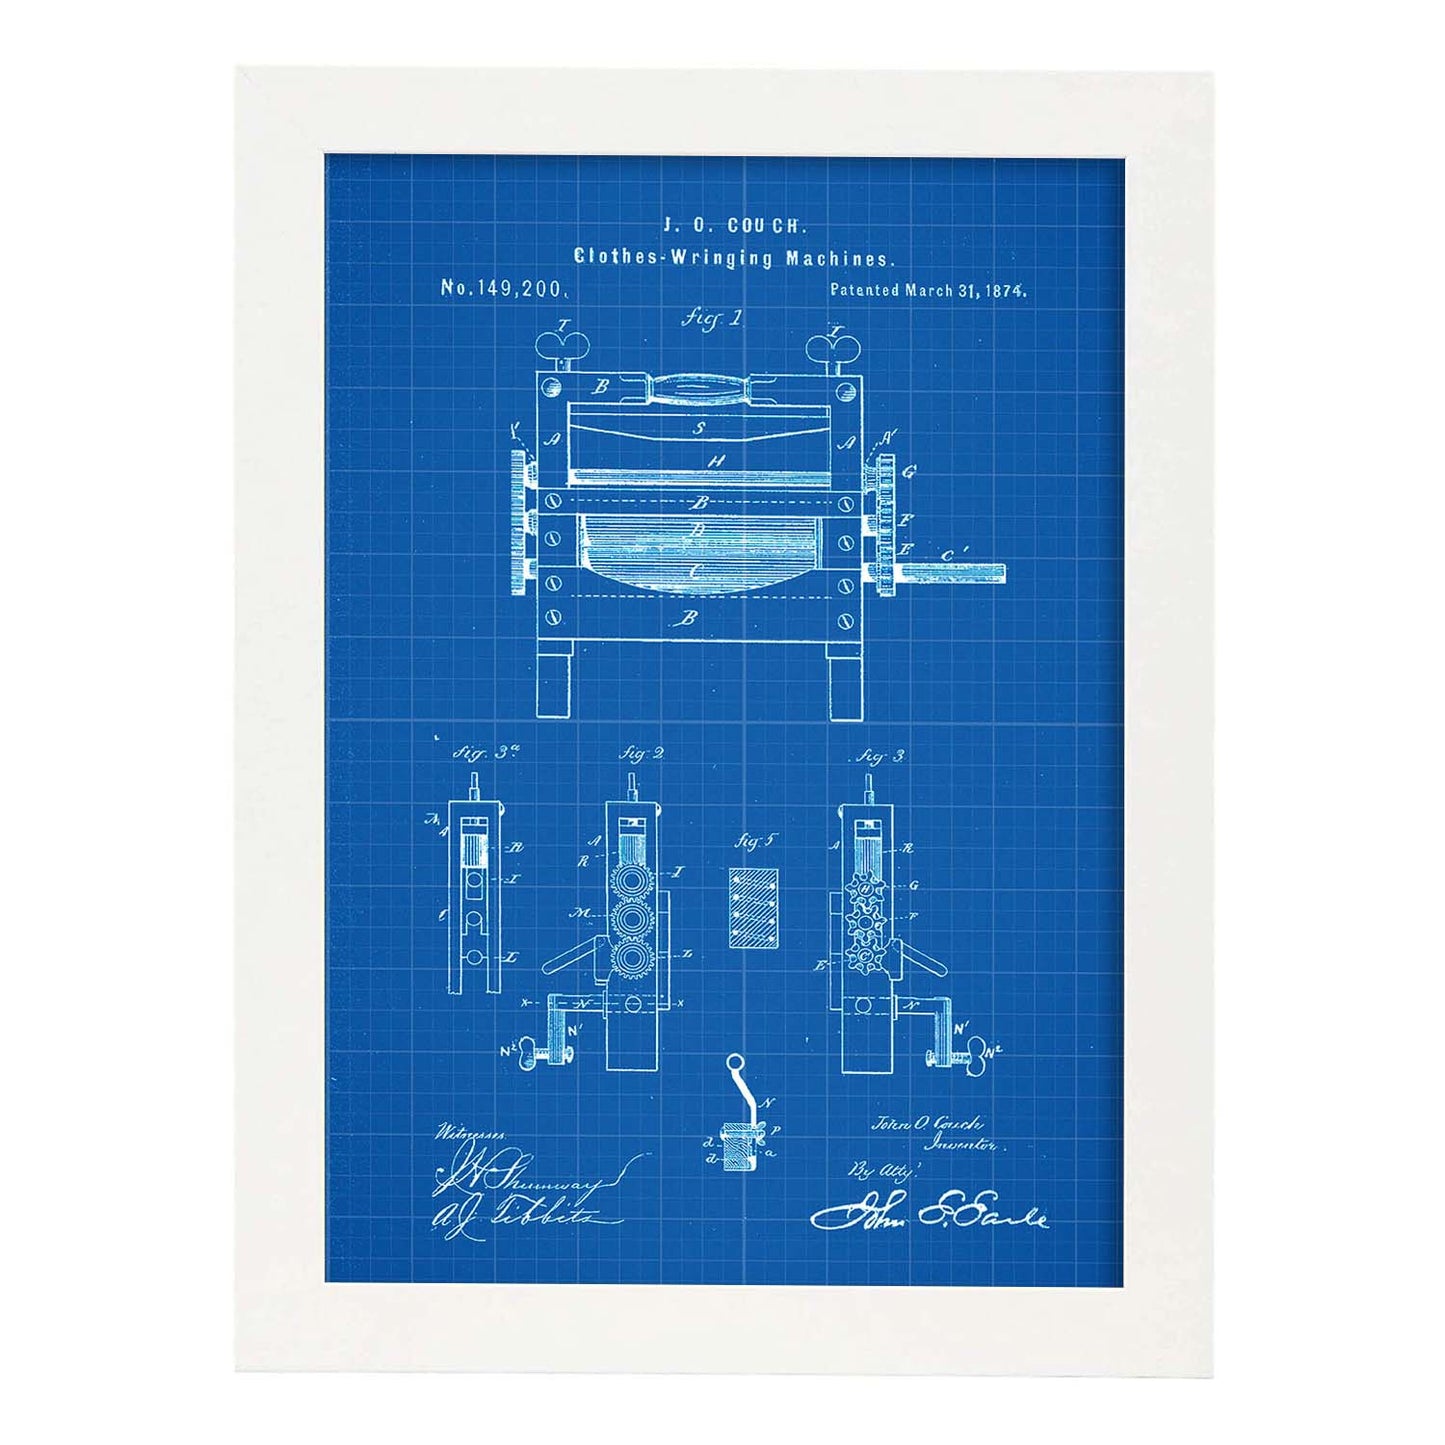 Poster con patente de Prensadora de ropa. Lámina con diseño de patente antigua-Artwork-Nacnic-A4-Marco Blanco-Nacnic Estudio SL